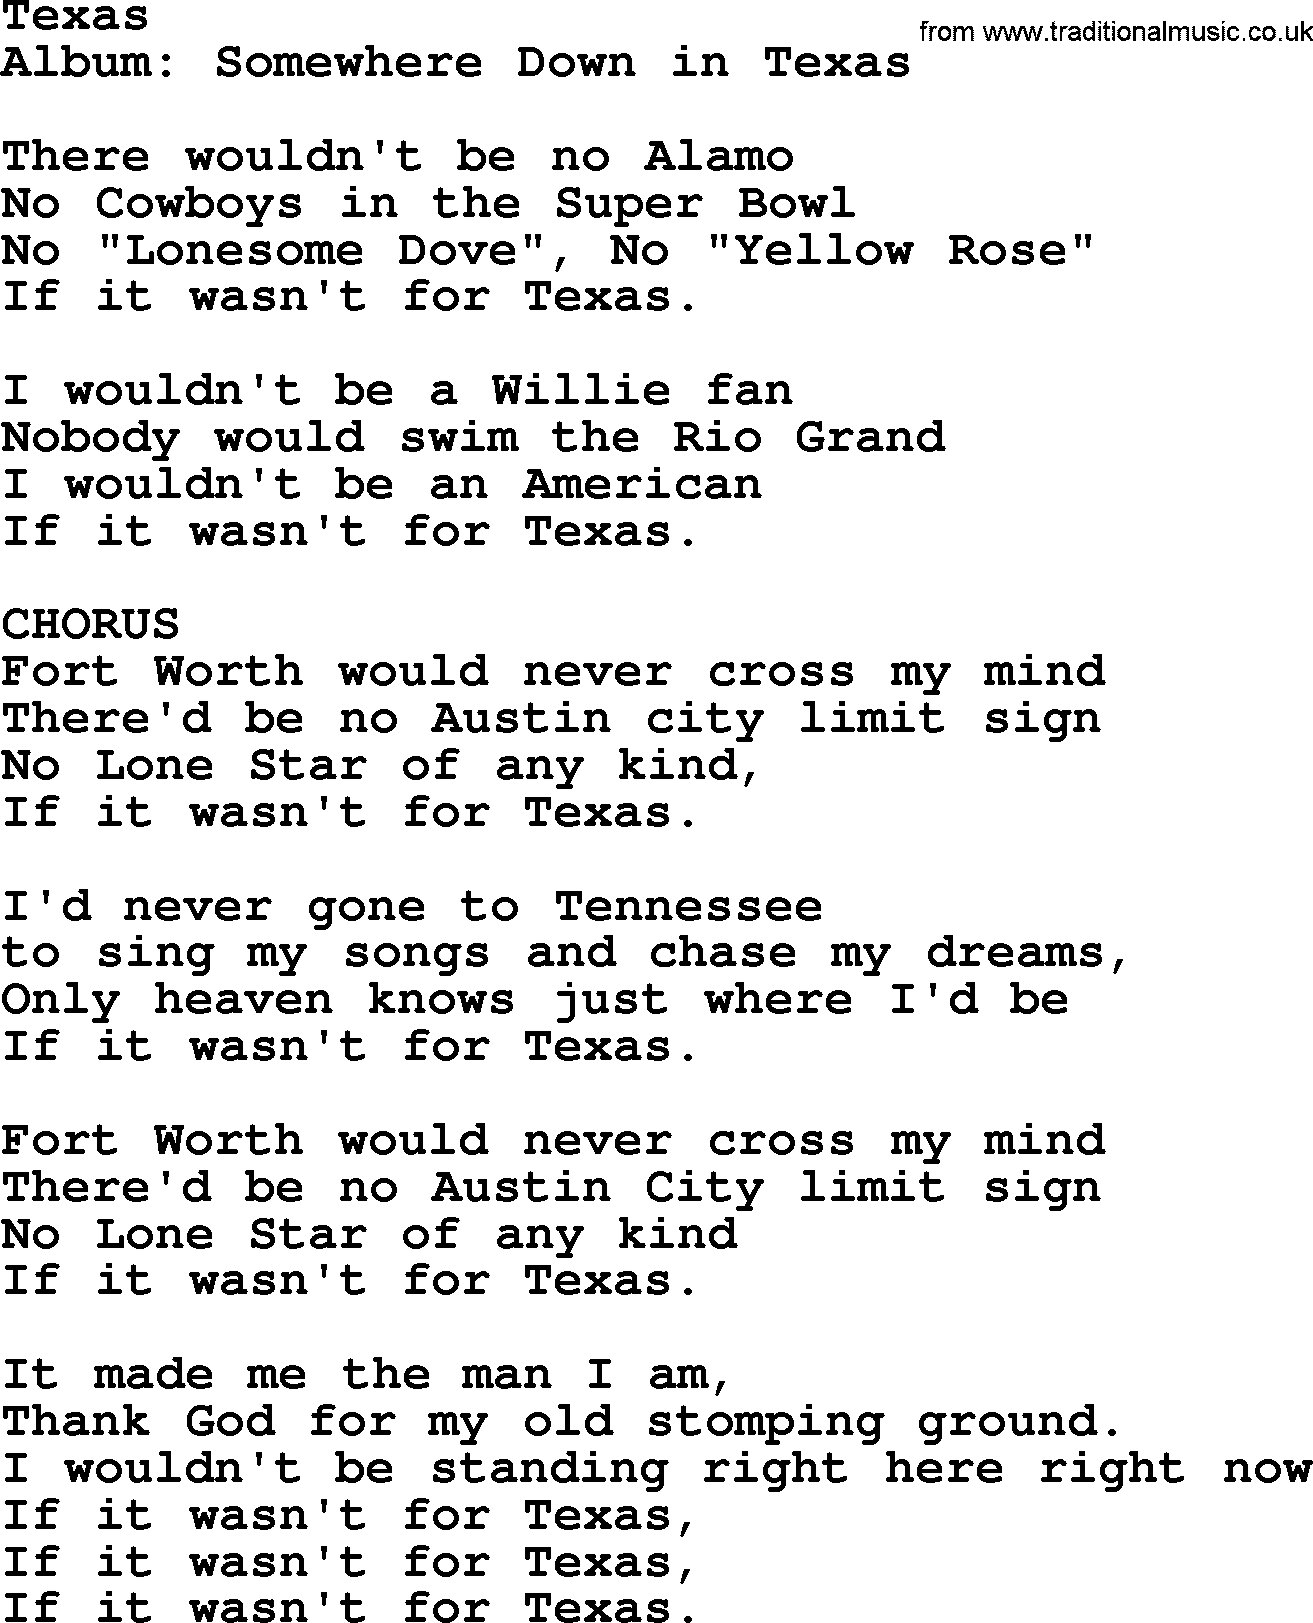 George Strait song: Texas, lyrics